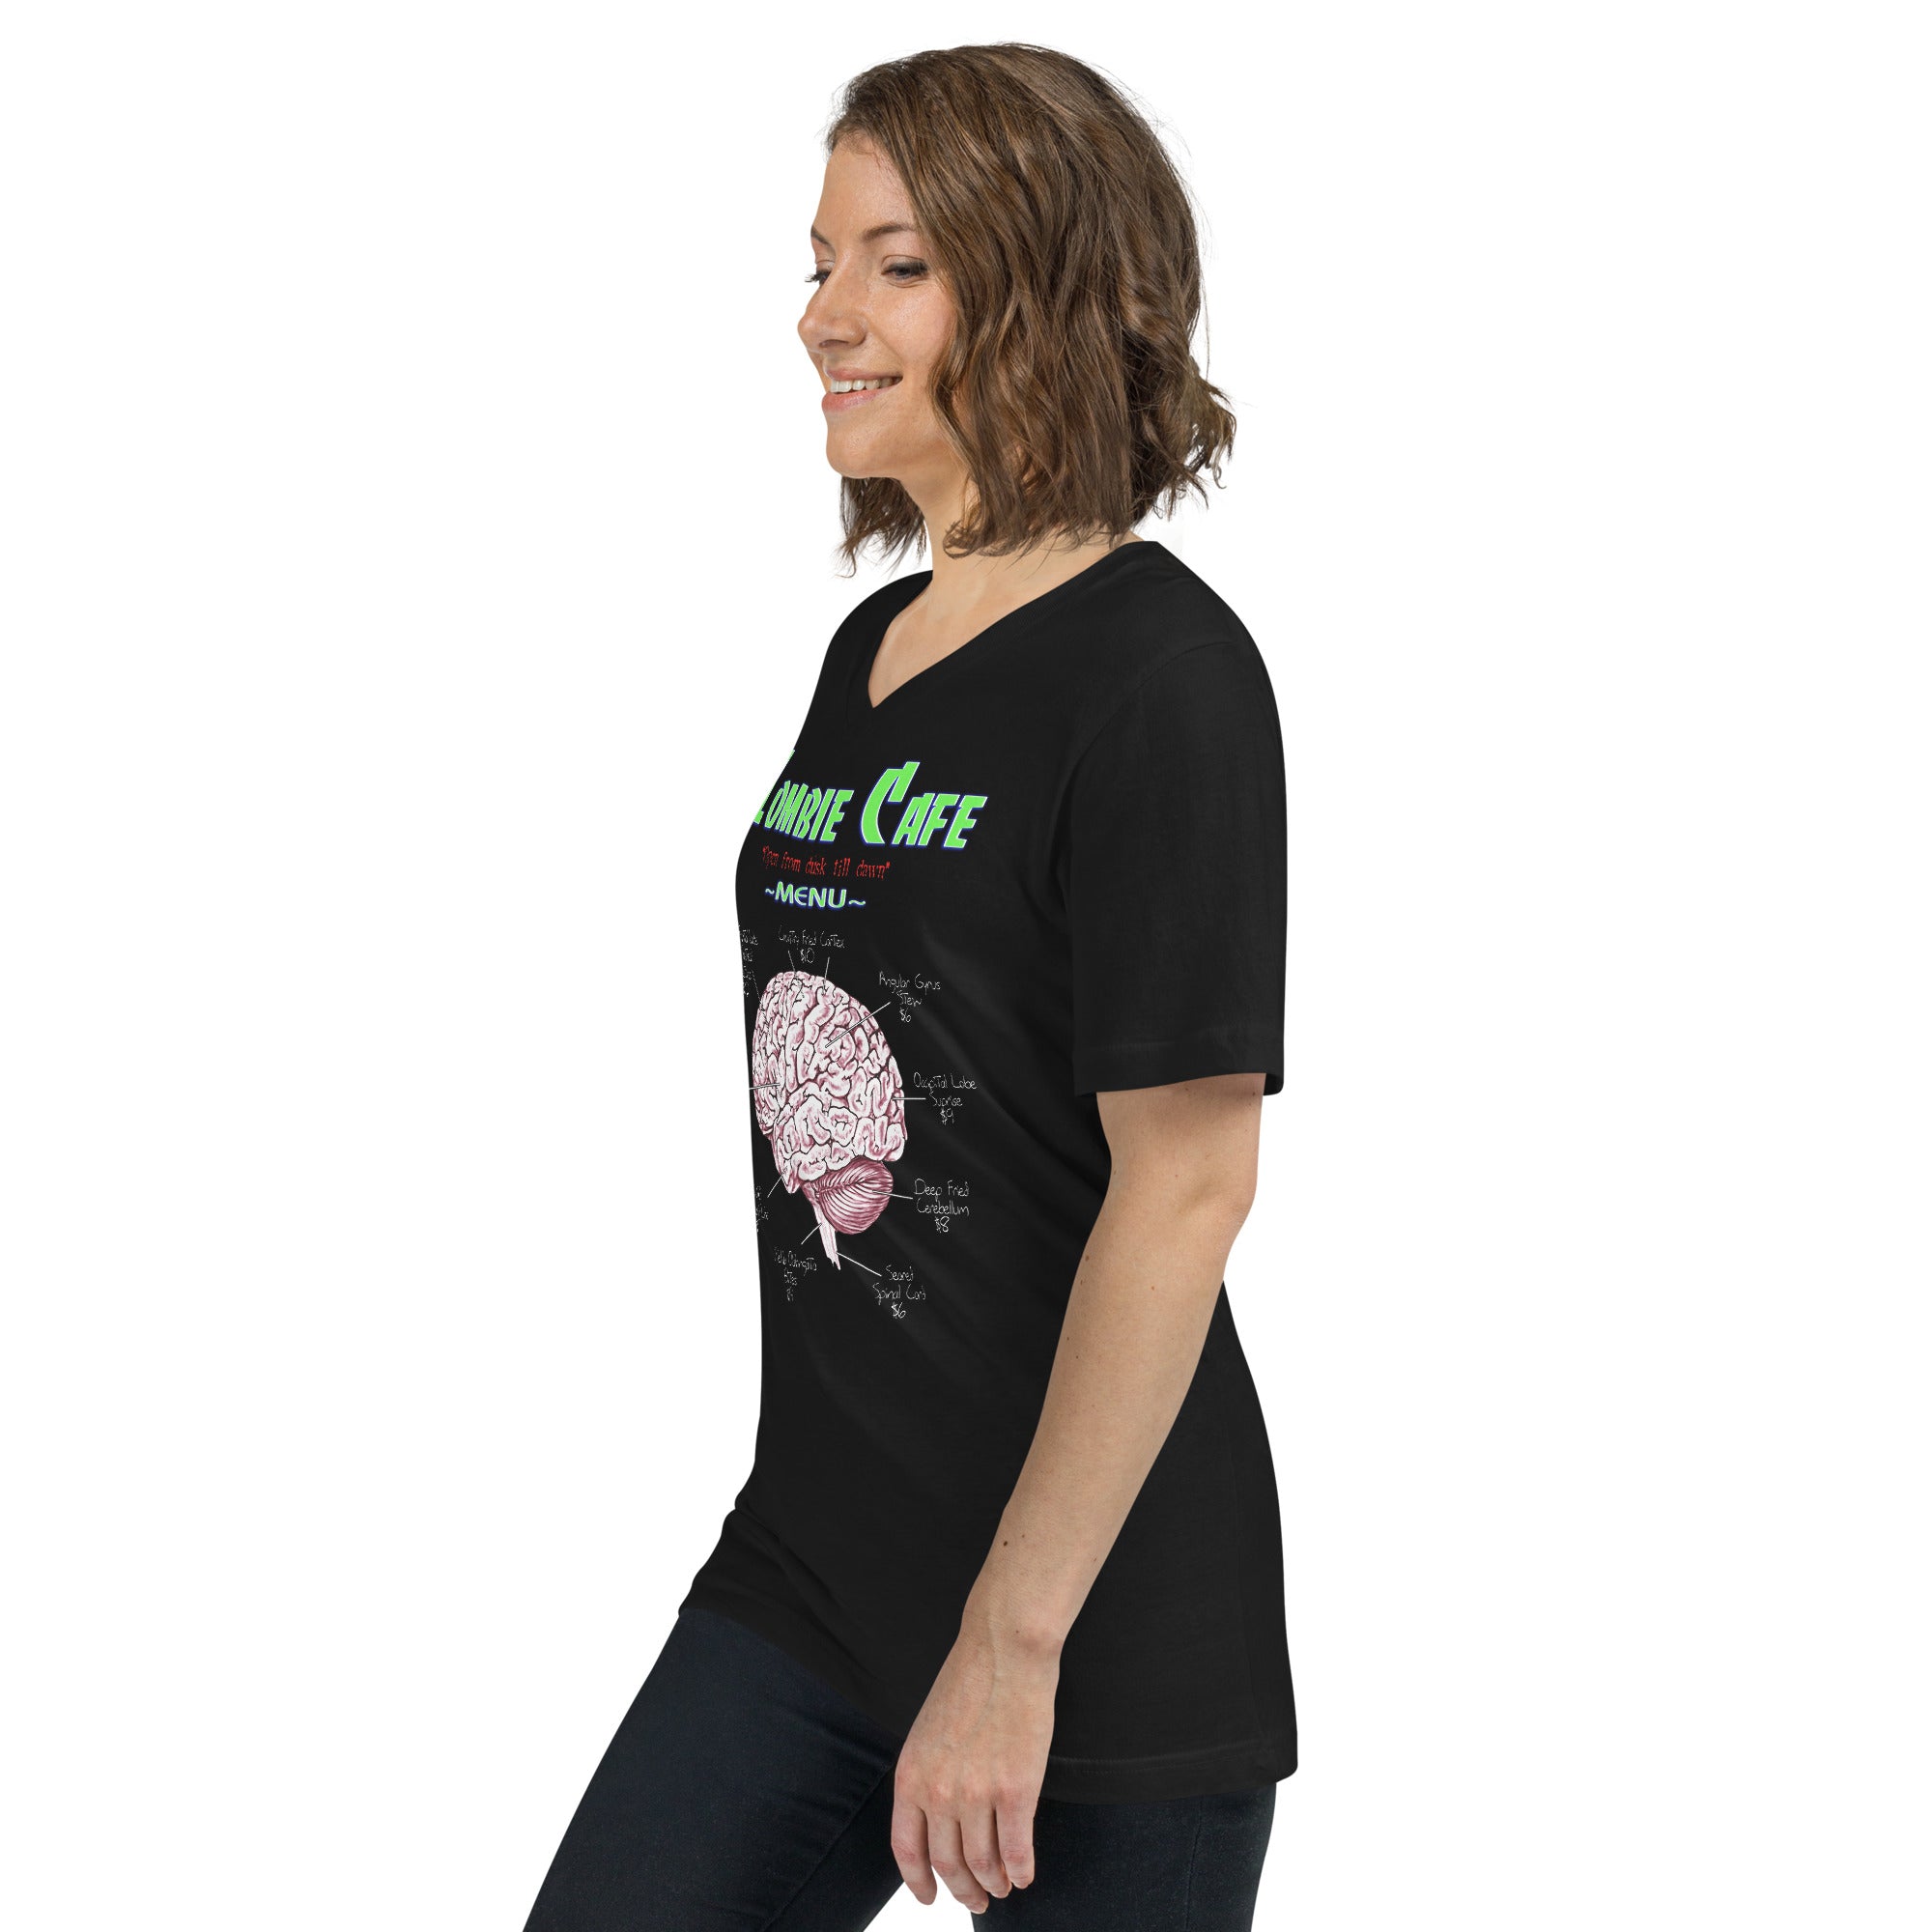 Zombie Cafe Brains Menu Horror Women's Short Sleeve V-Neck T-Shirt - Edge of Life Designs